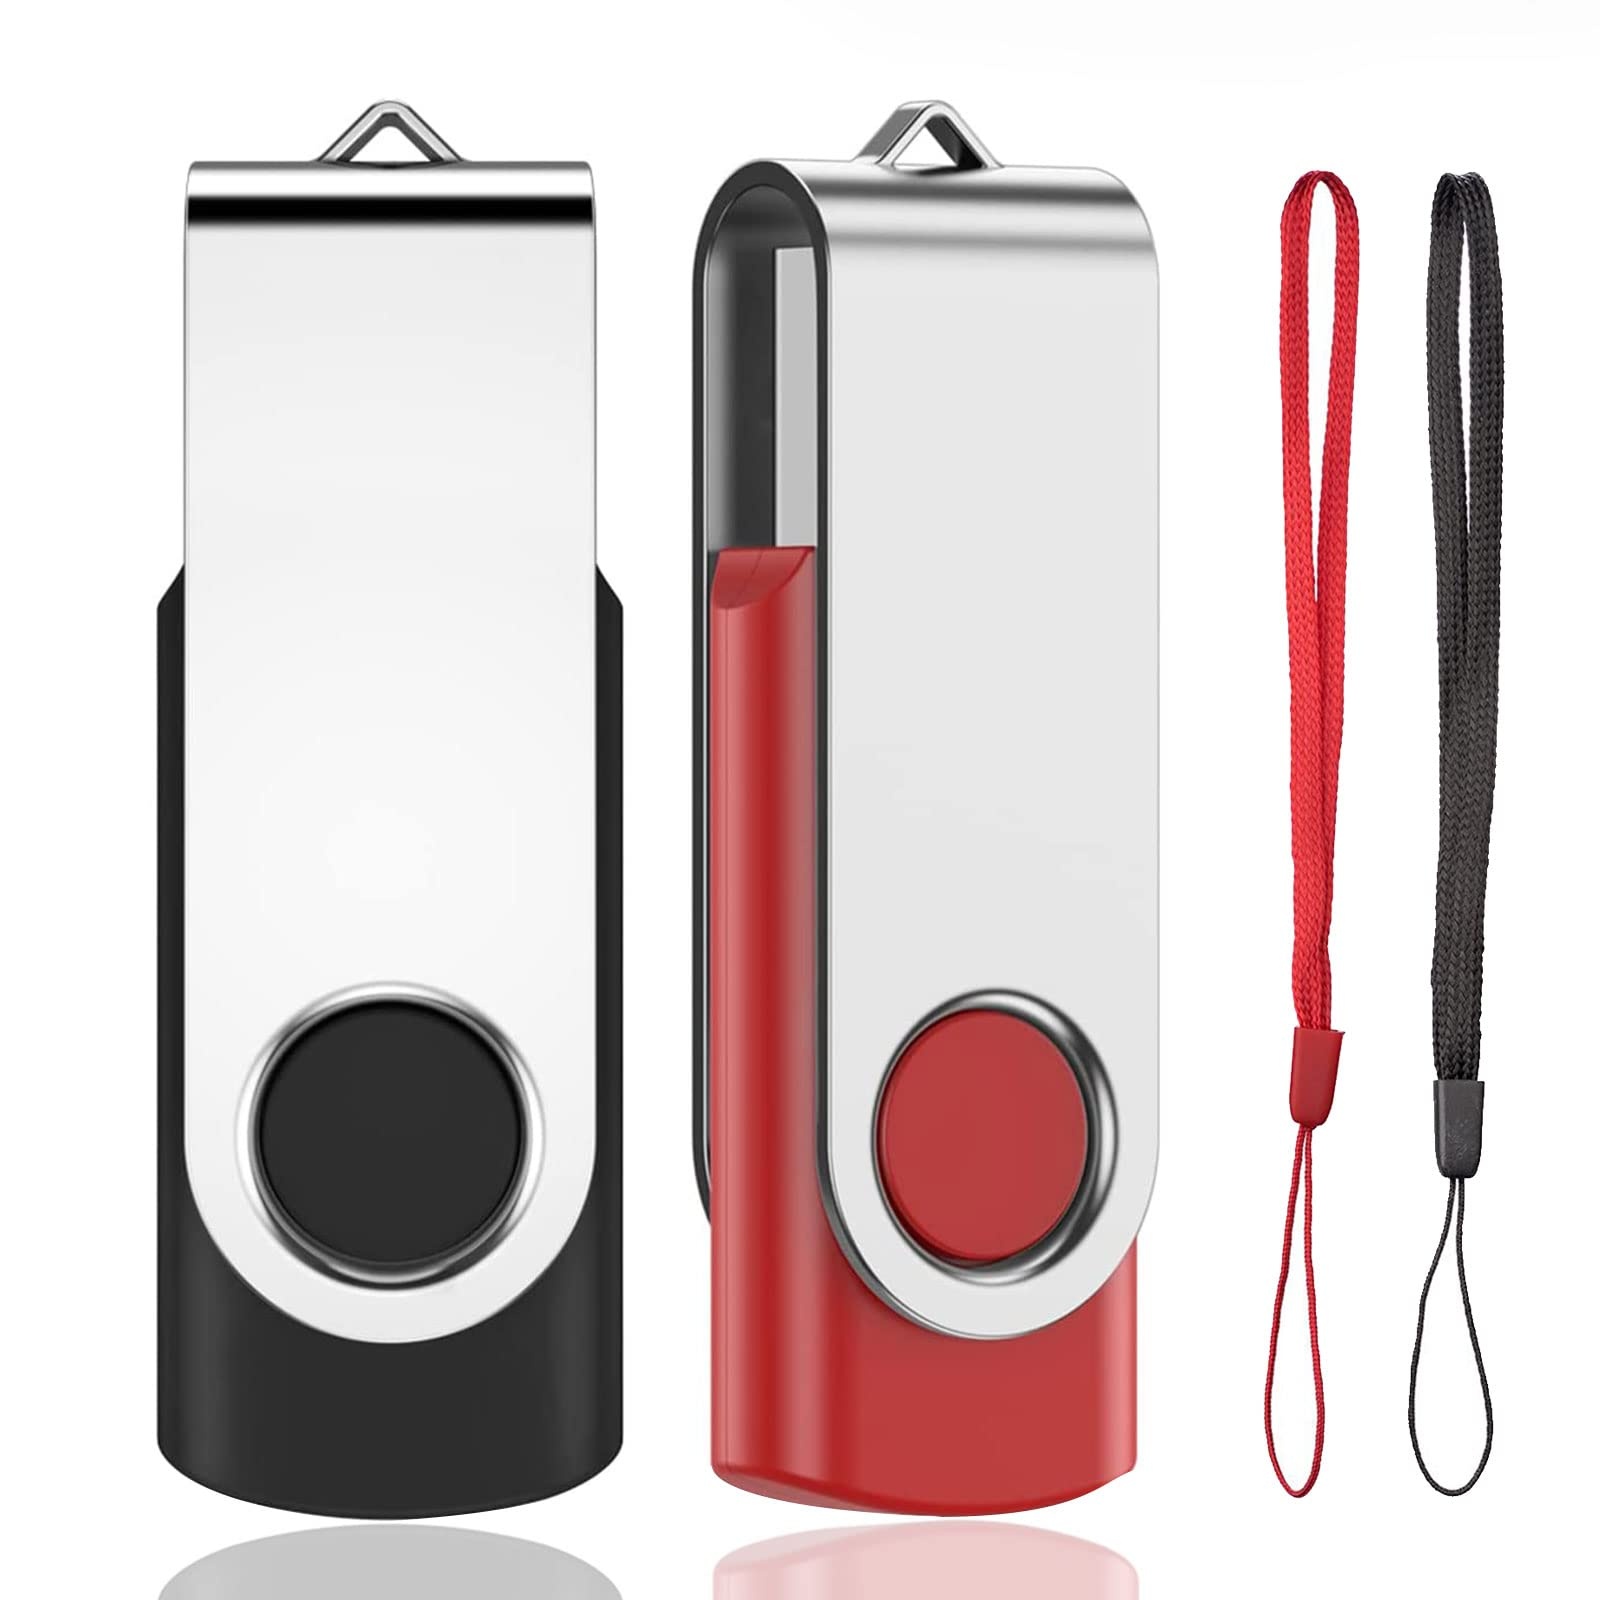 USB-Stick, 1 GB, 2 Stück, USB 2.0, Speicher, drehbar, Pendrive, für Laptop/PC/Auto (Schwarz & Rot)